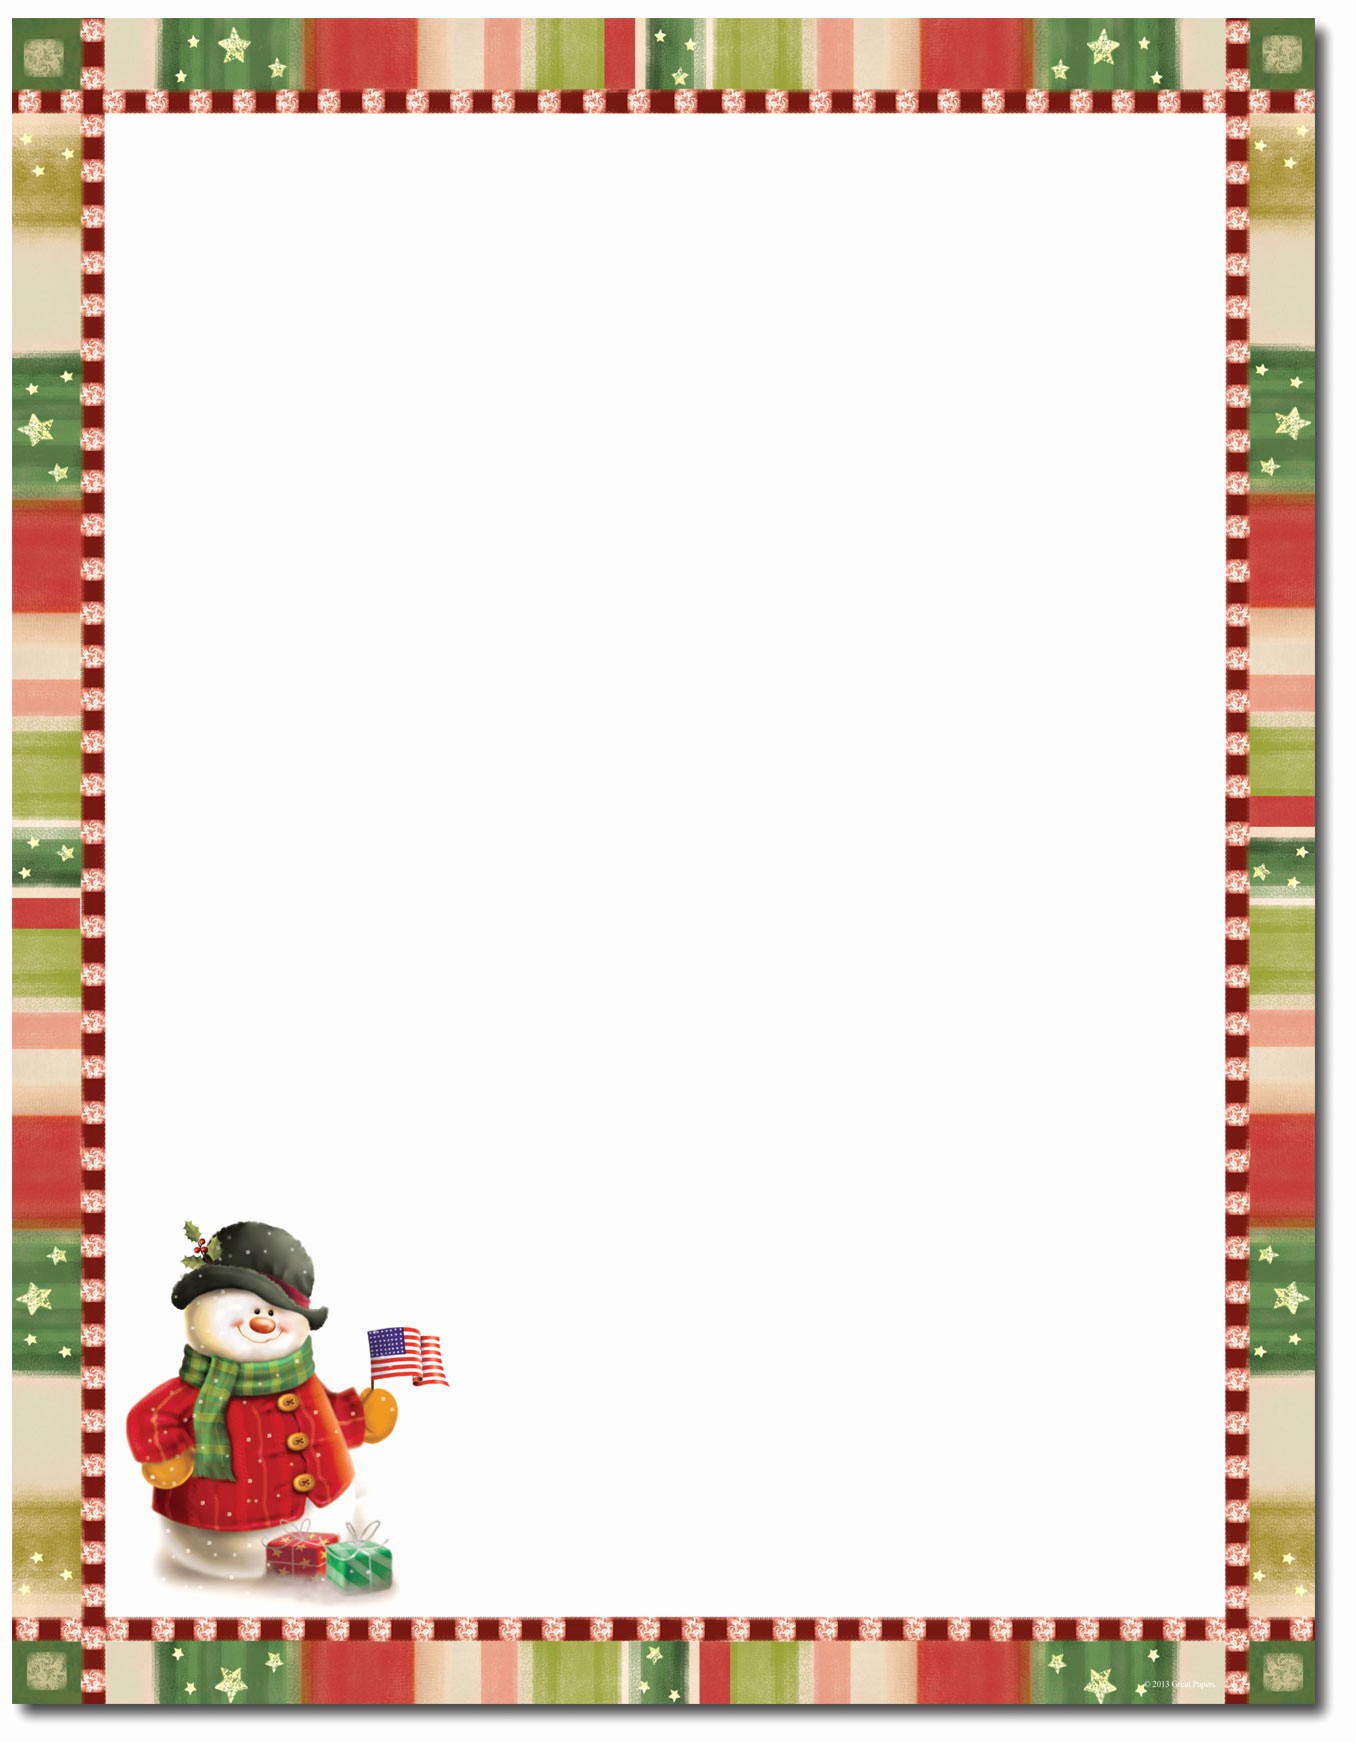 Free Christmas Stationery to Print Luxury Free Printable Christmas Borders Stationery – Halloween